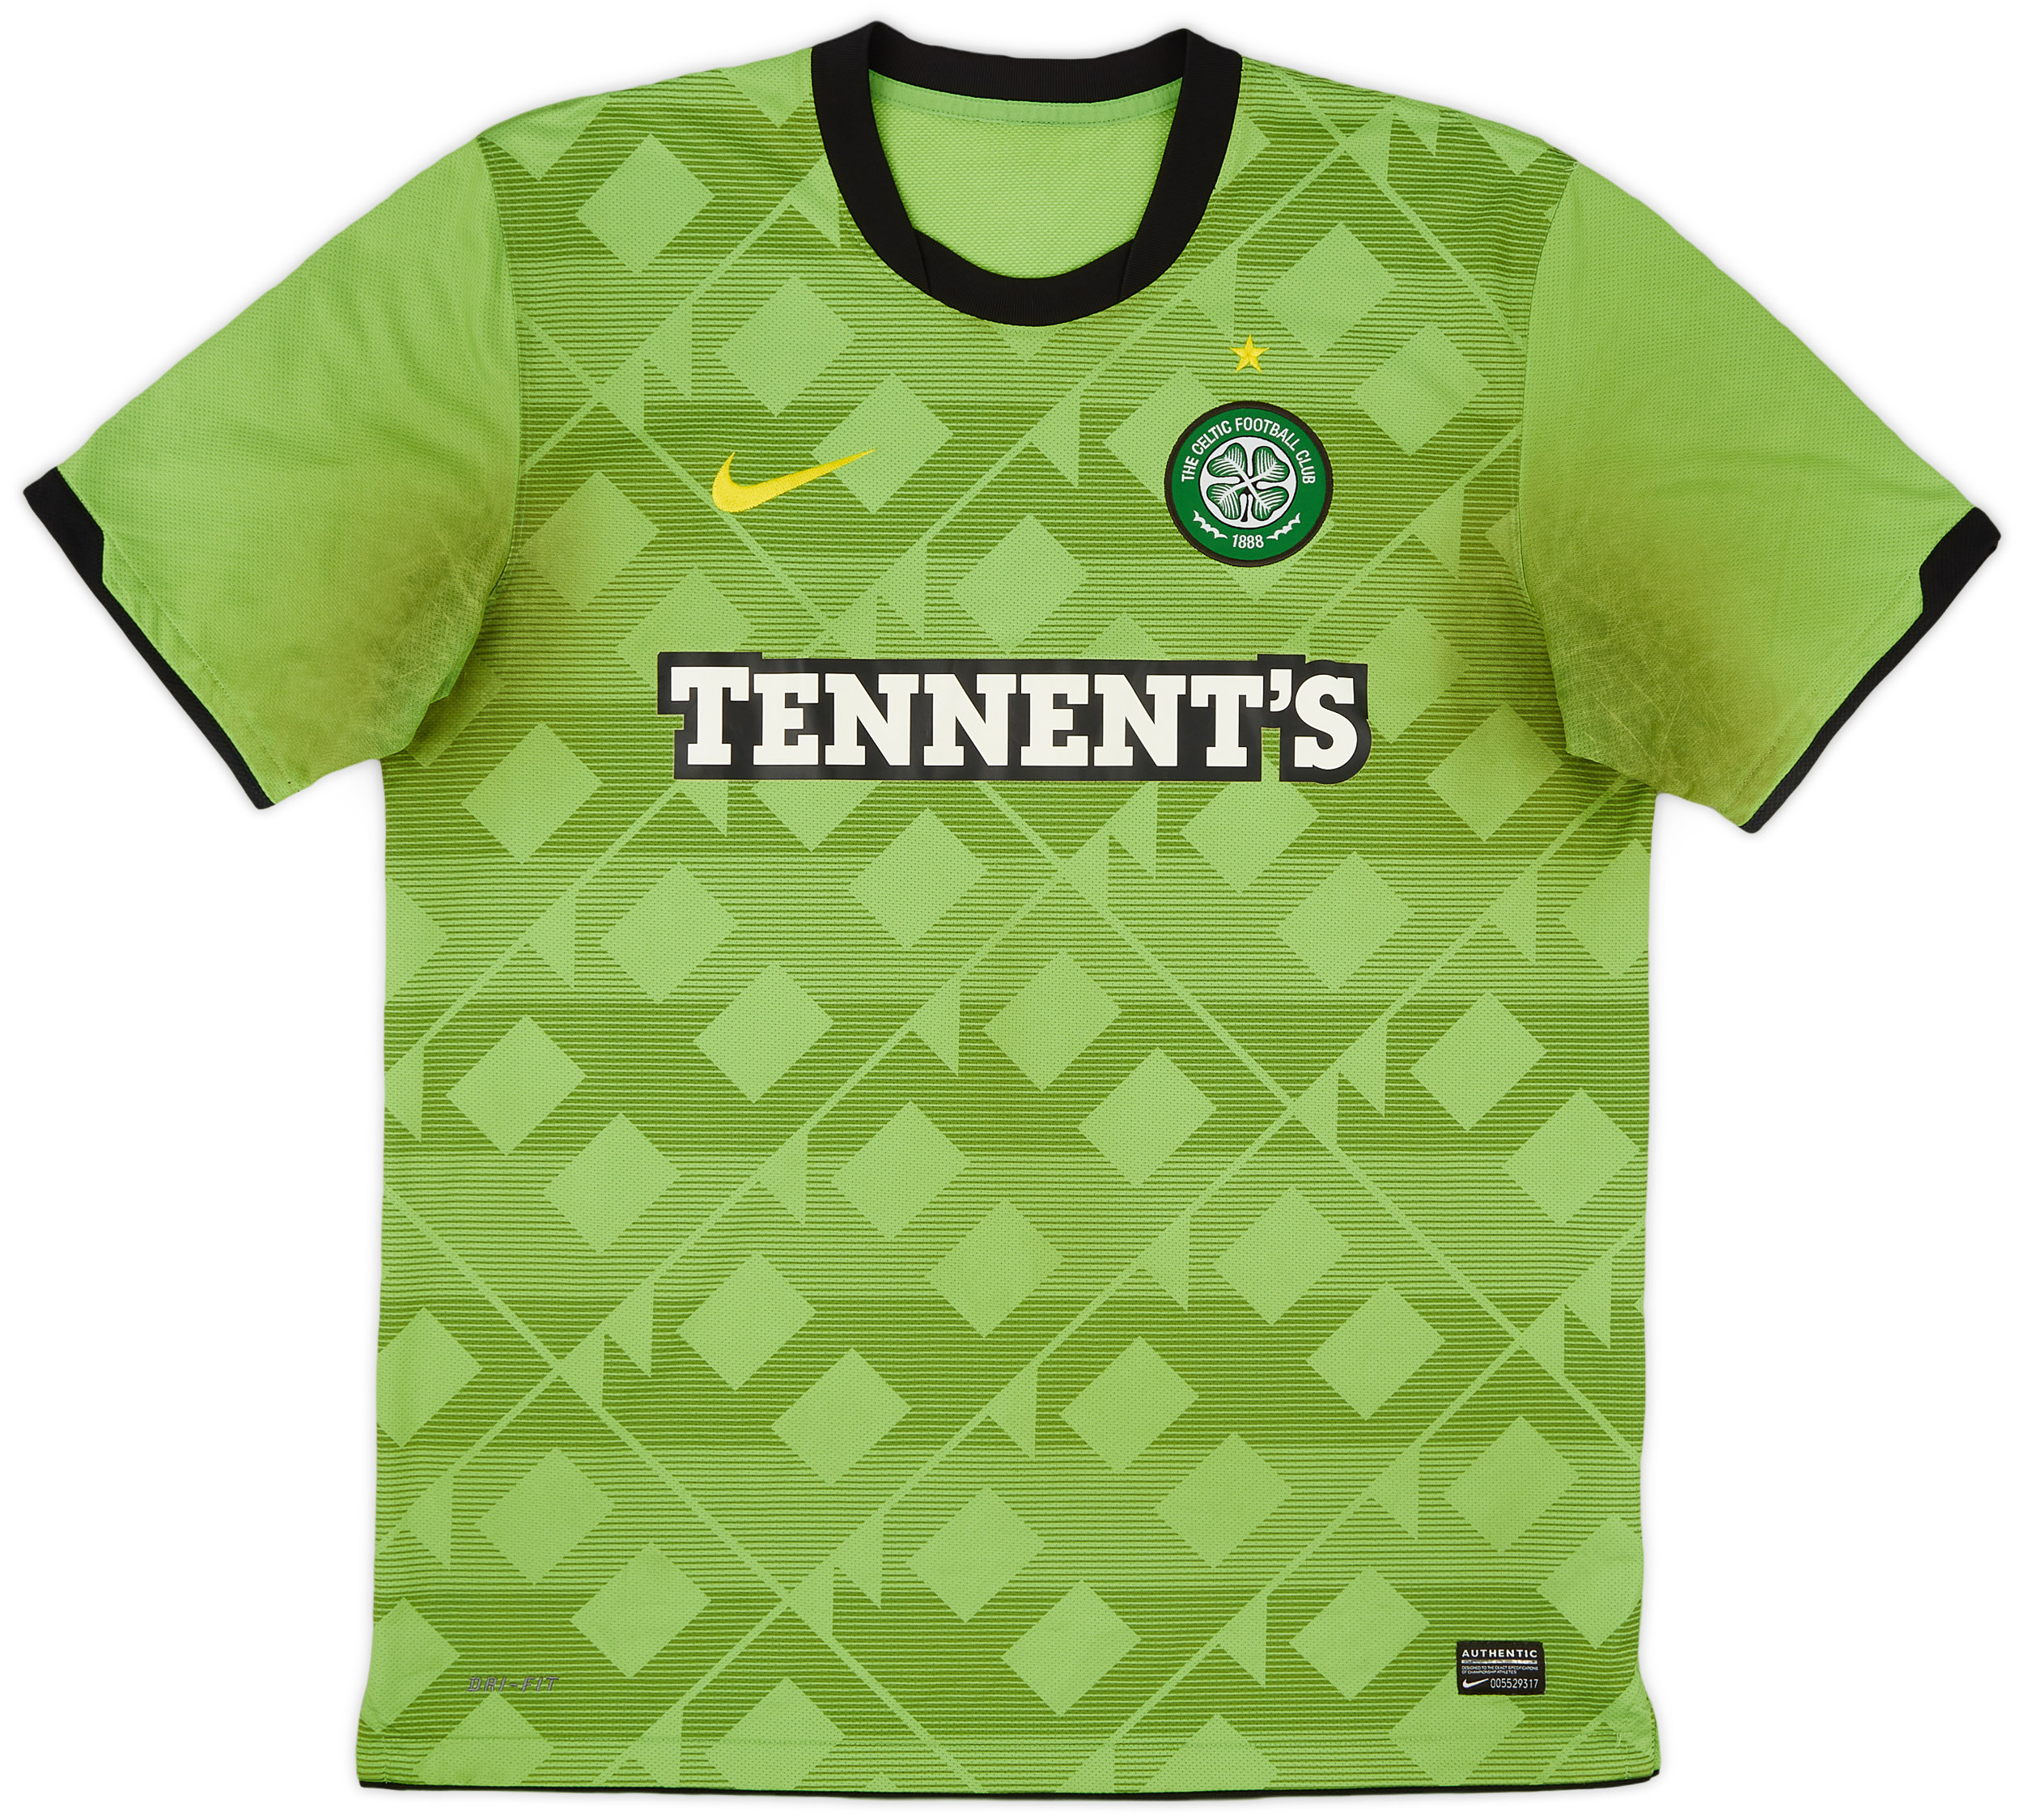 2010-11 Celtic Away Shirt - 5/10 - ()